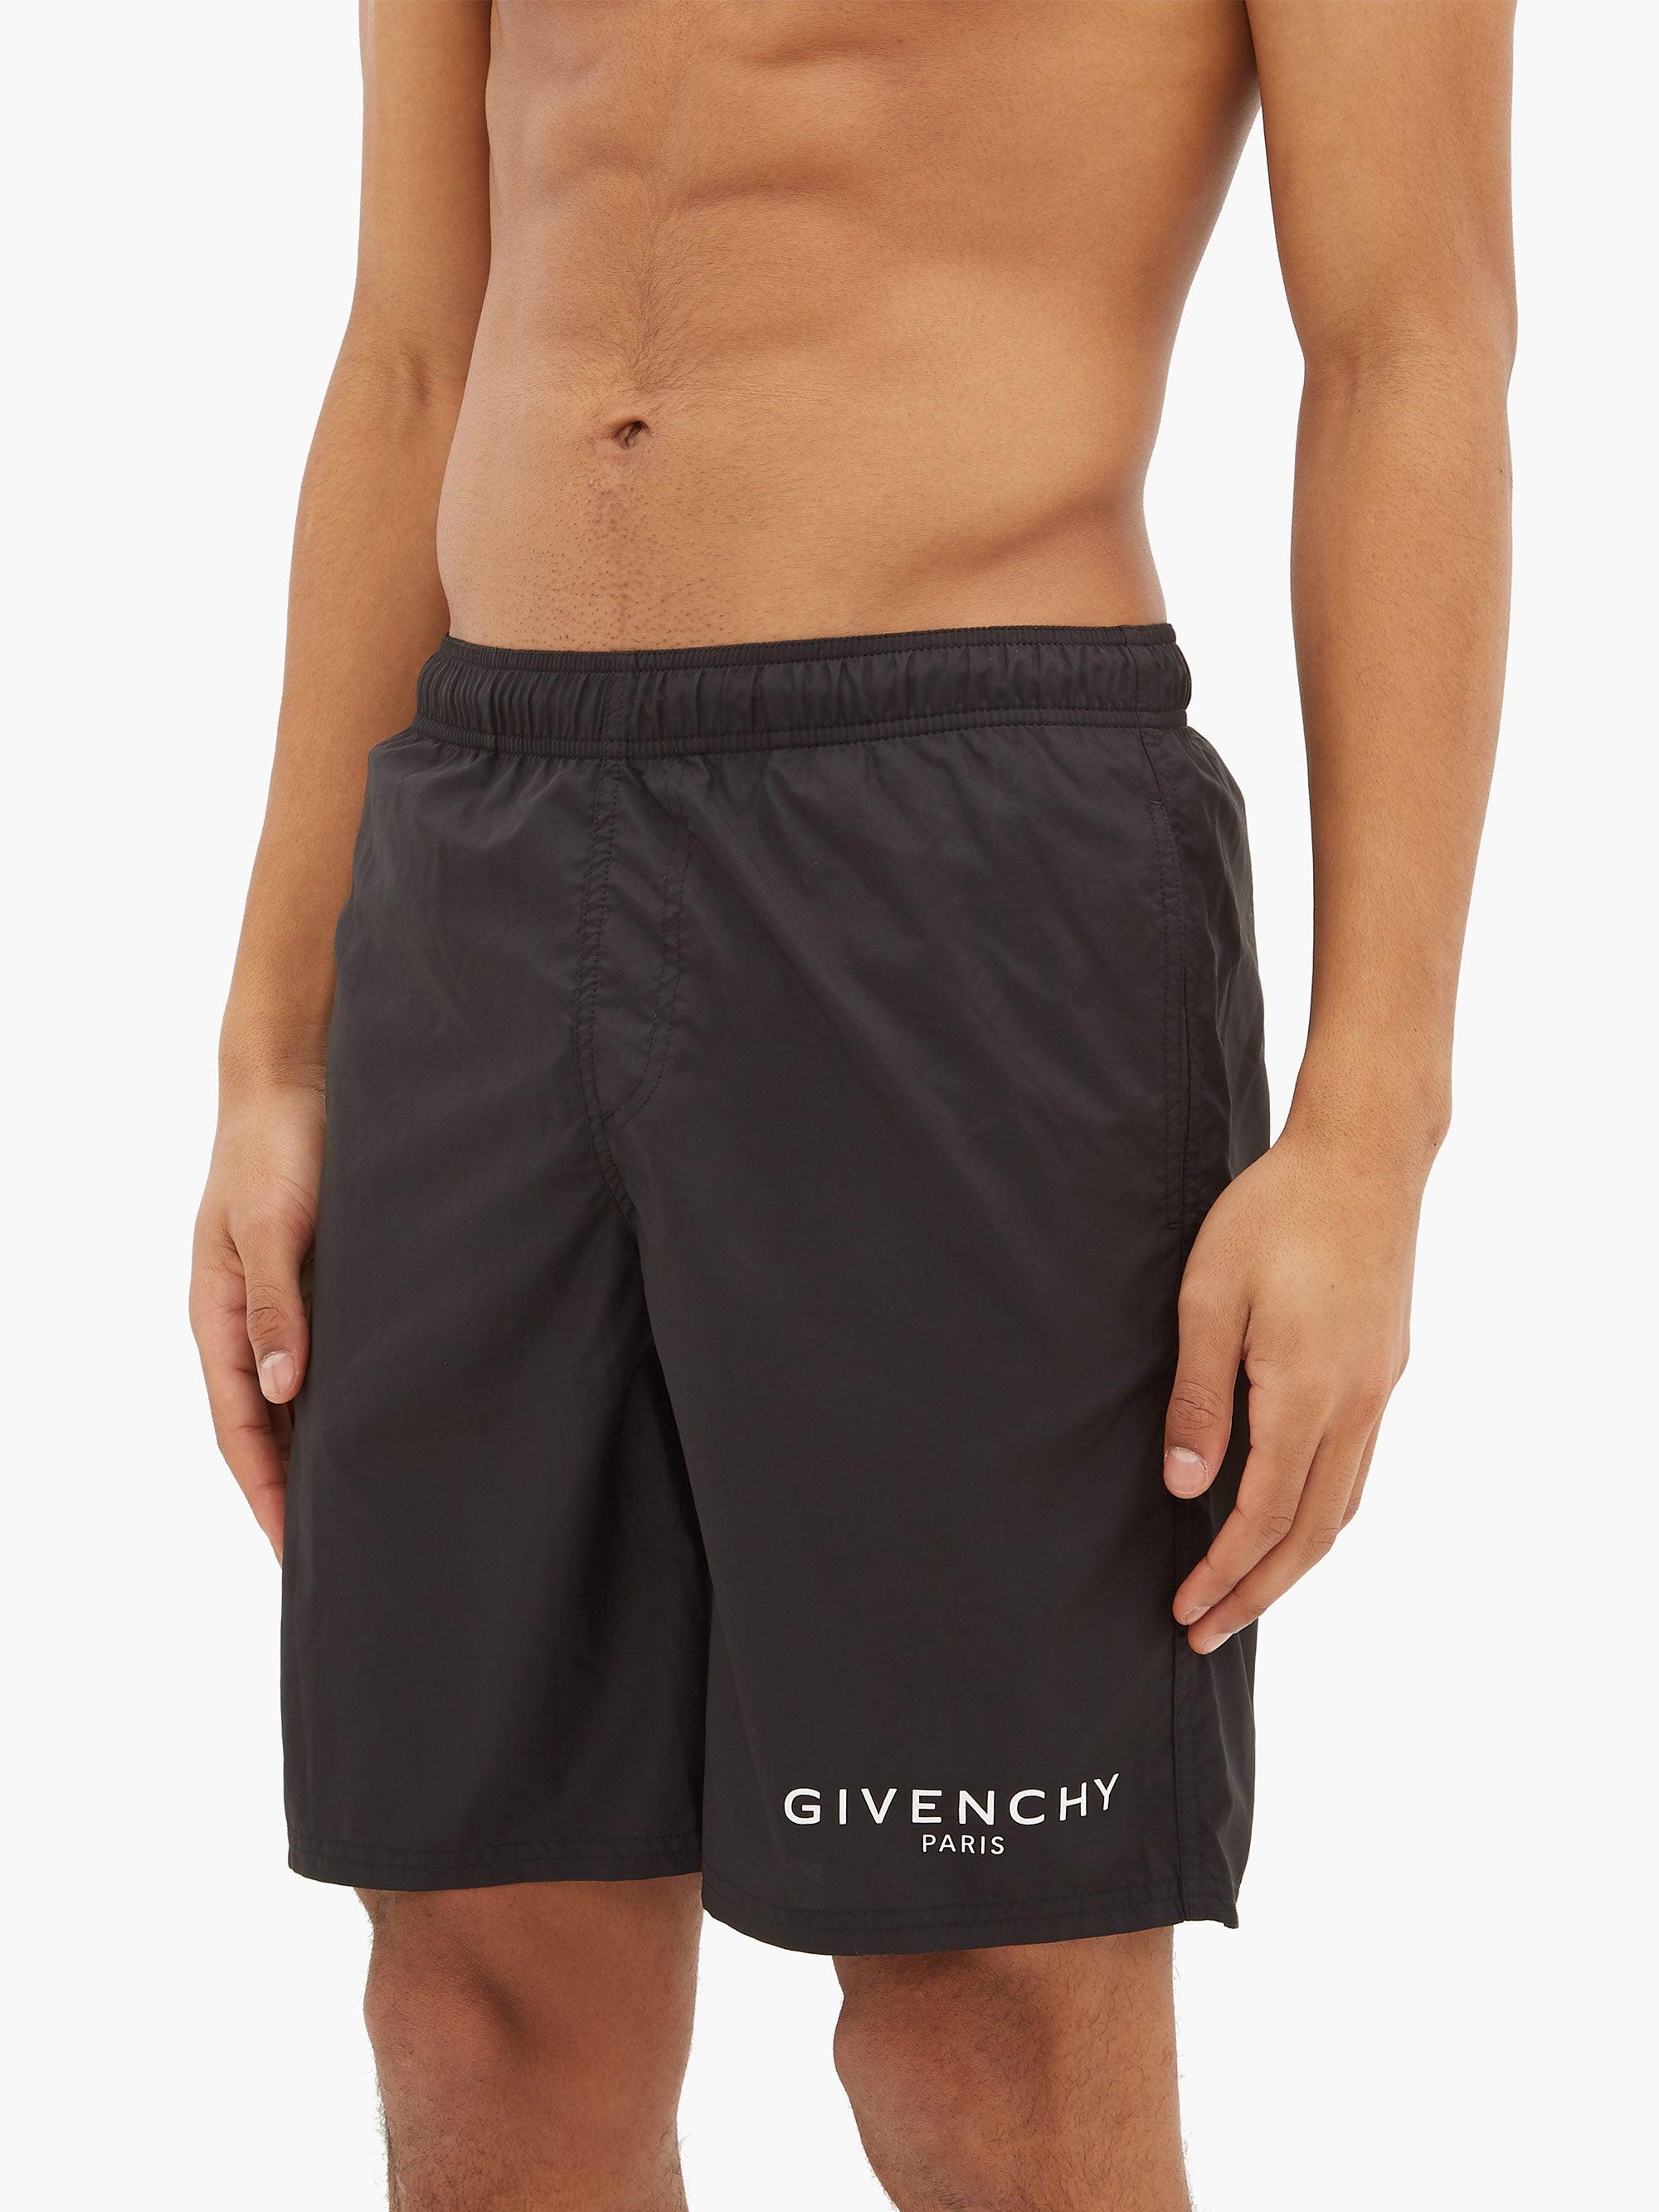 Givenchy Logo-print Satin Swim Shorts in Black for Men - Lyst